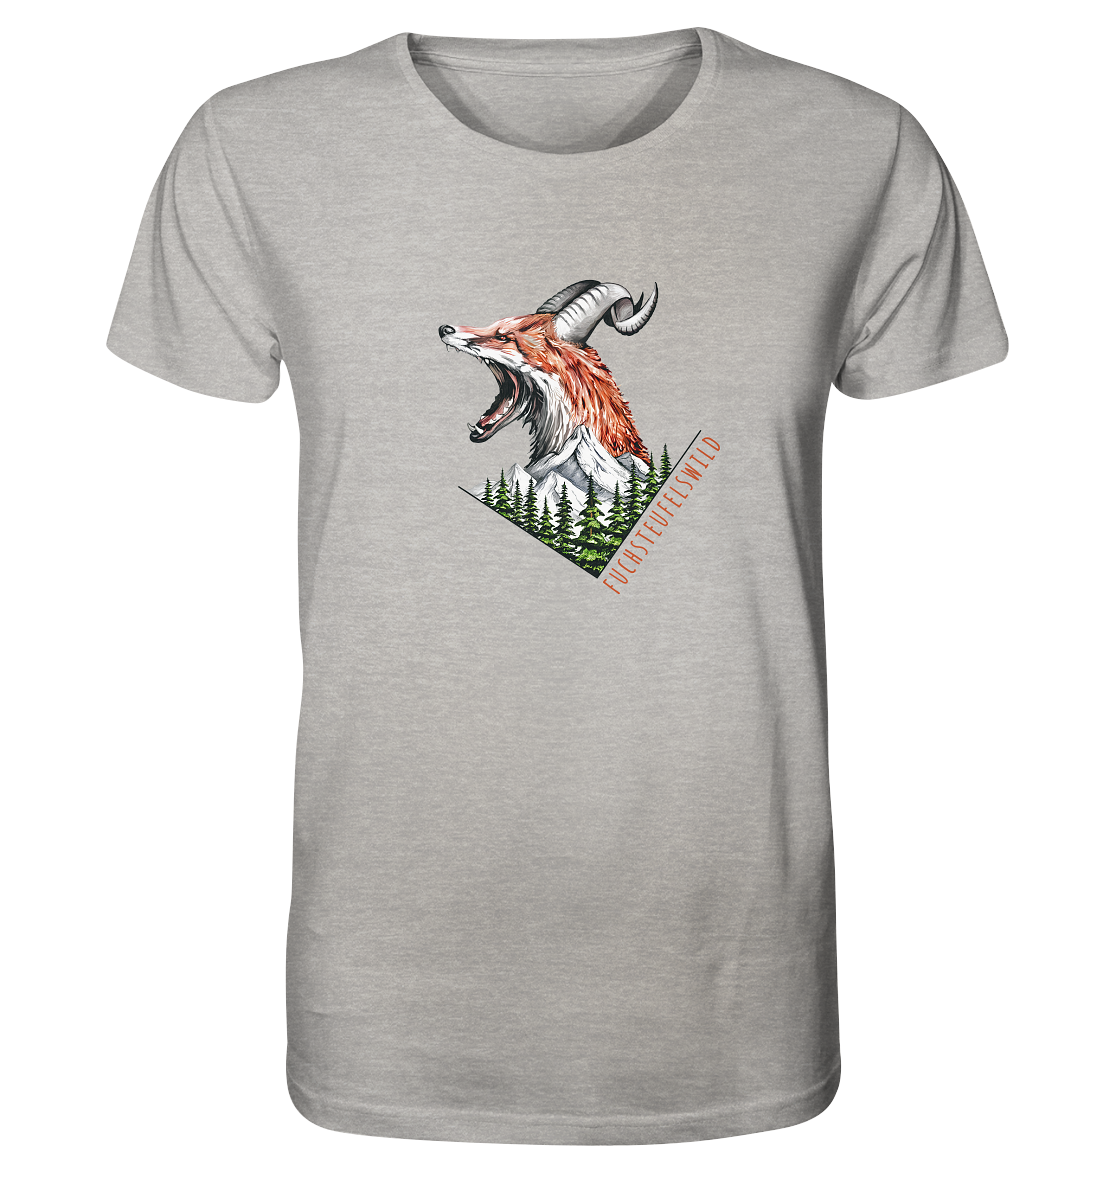 front-organic-shirt-meliert-c2c1c0-1116x-1.png